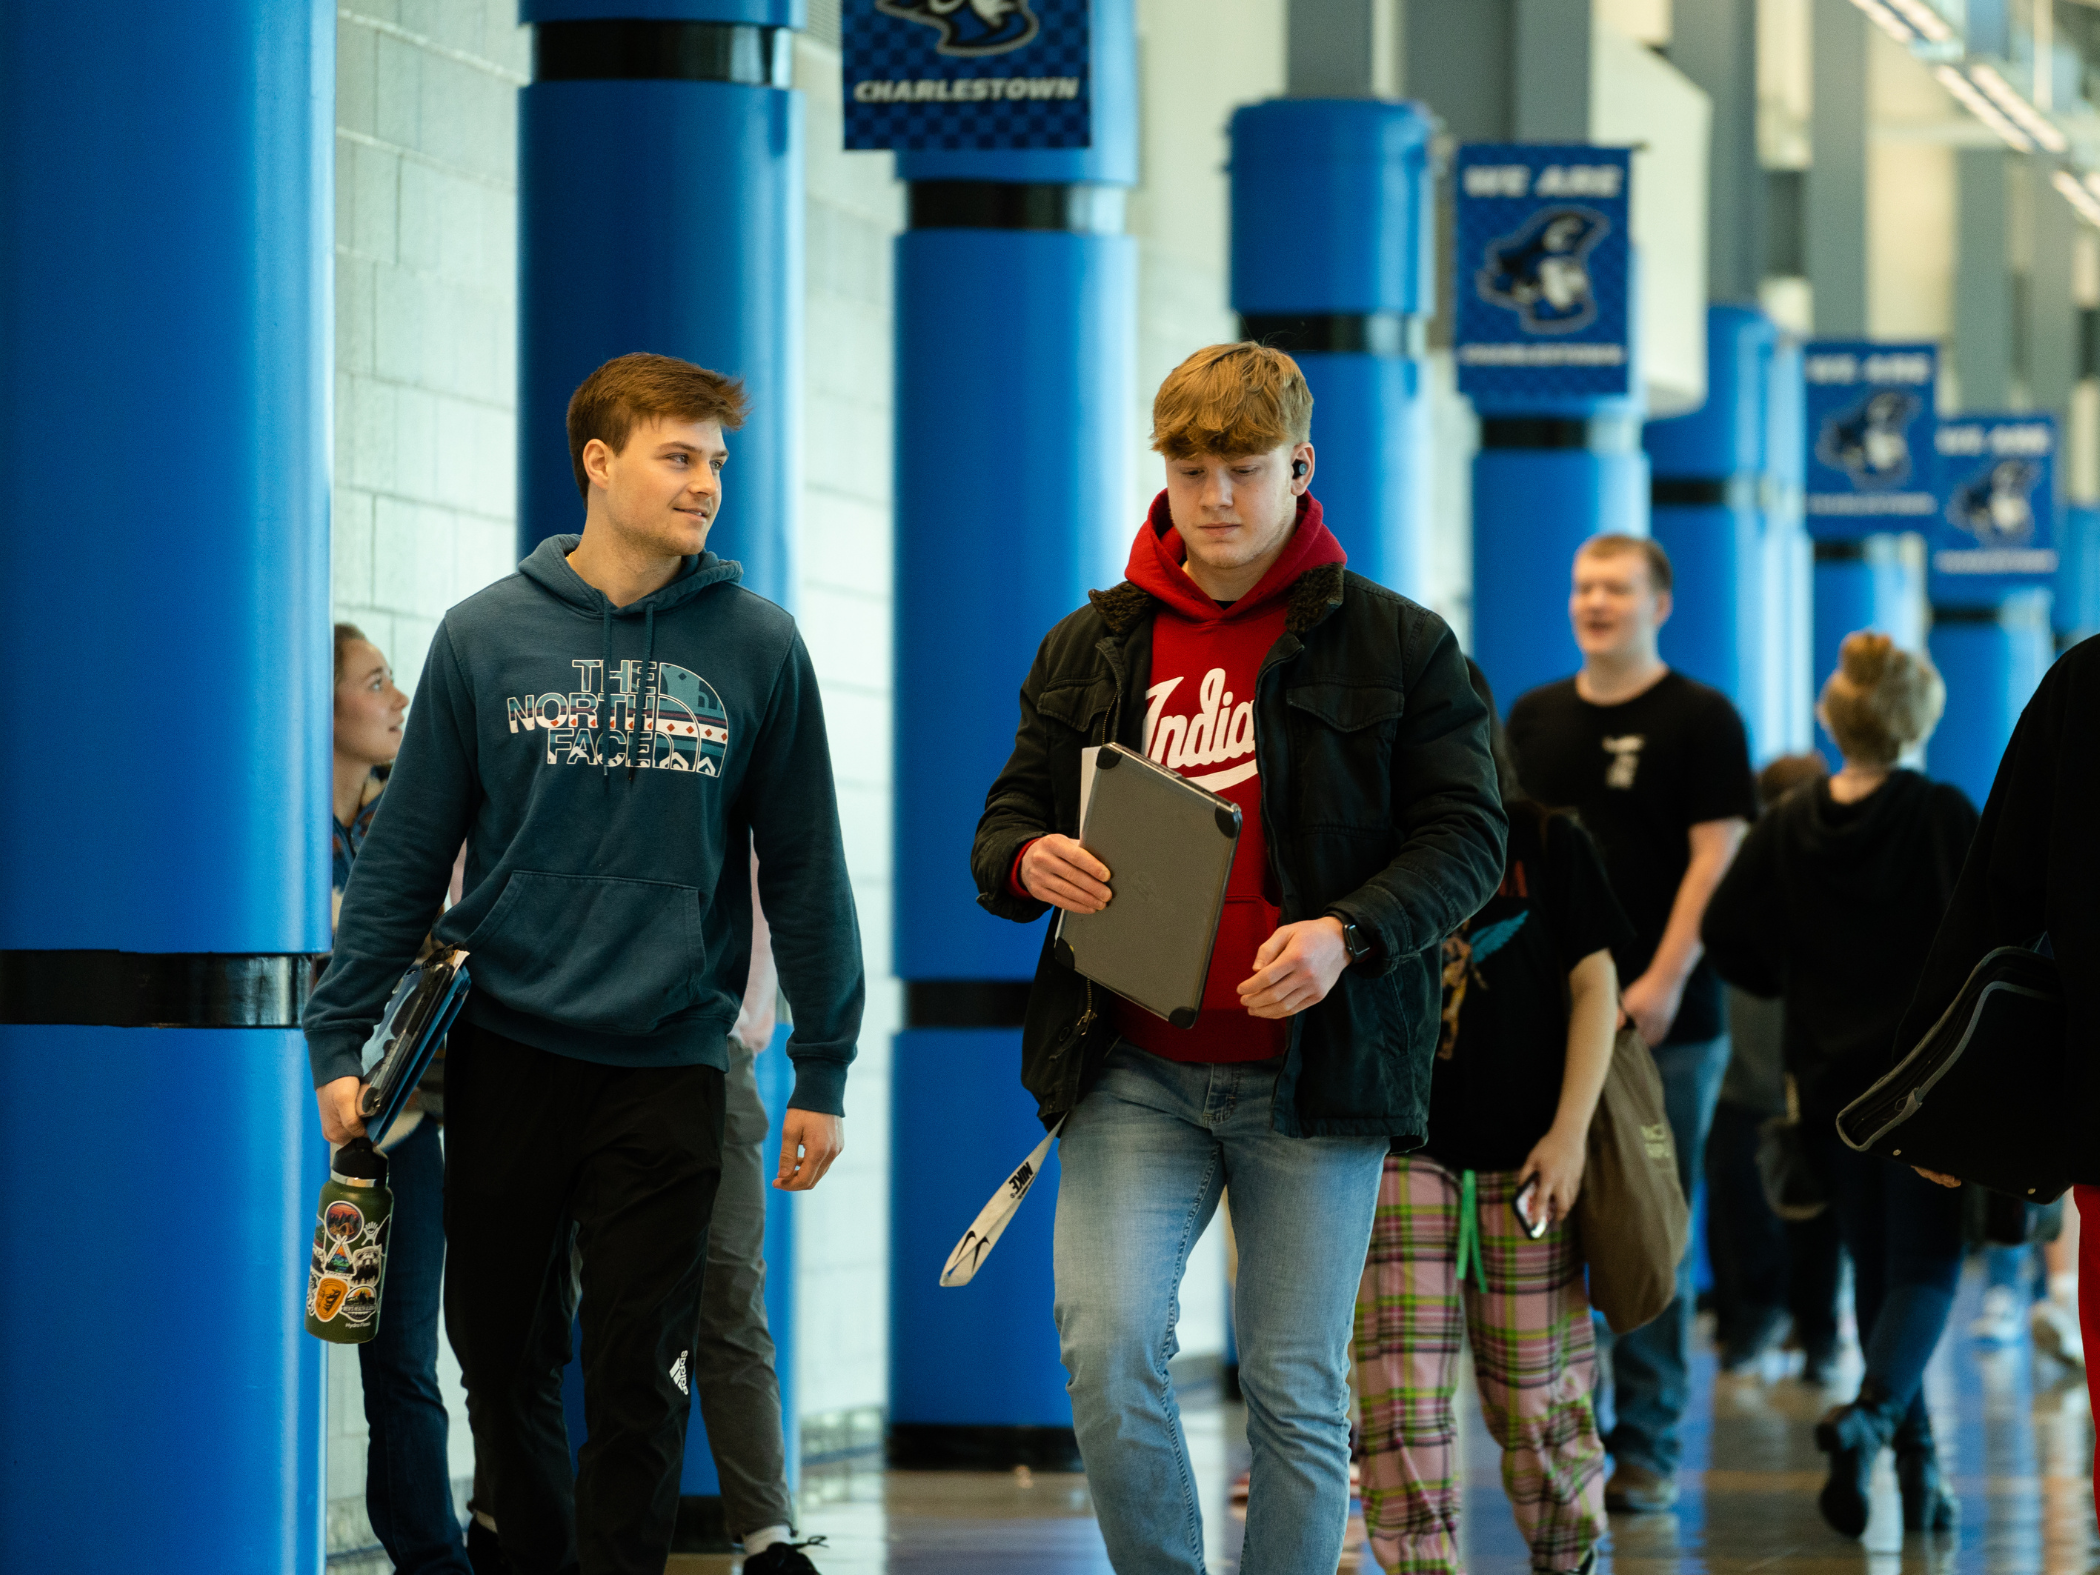 Students walking down the hallway